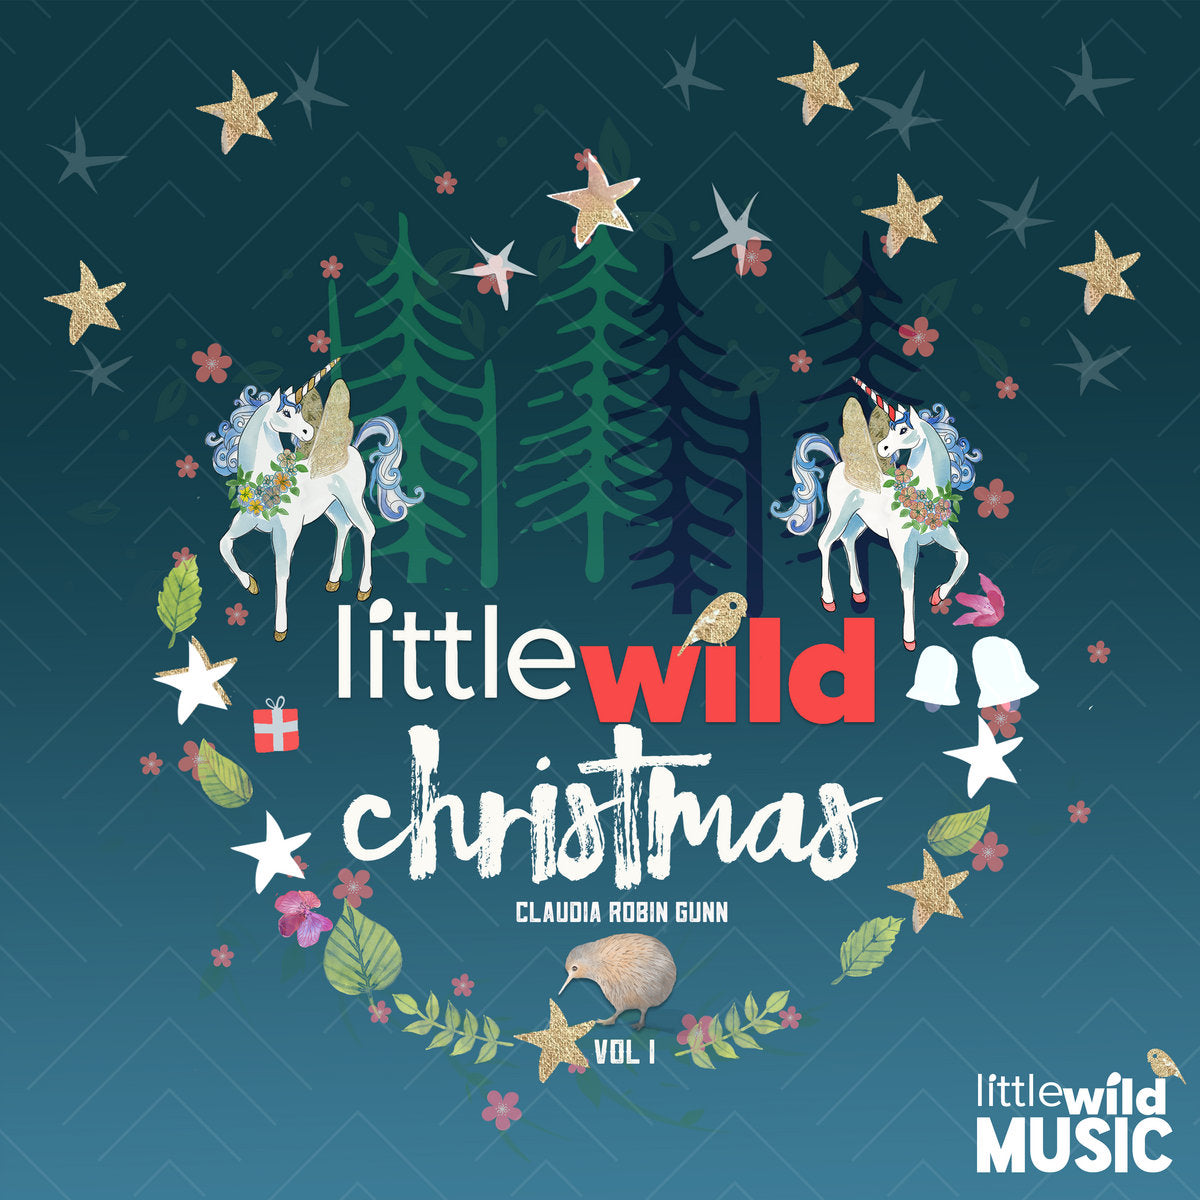 Little Wild Christmas Volume 1 Digital Album